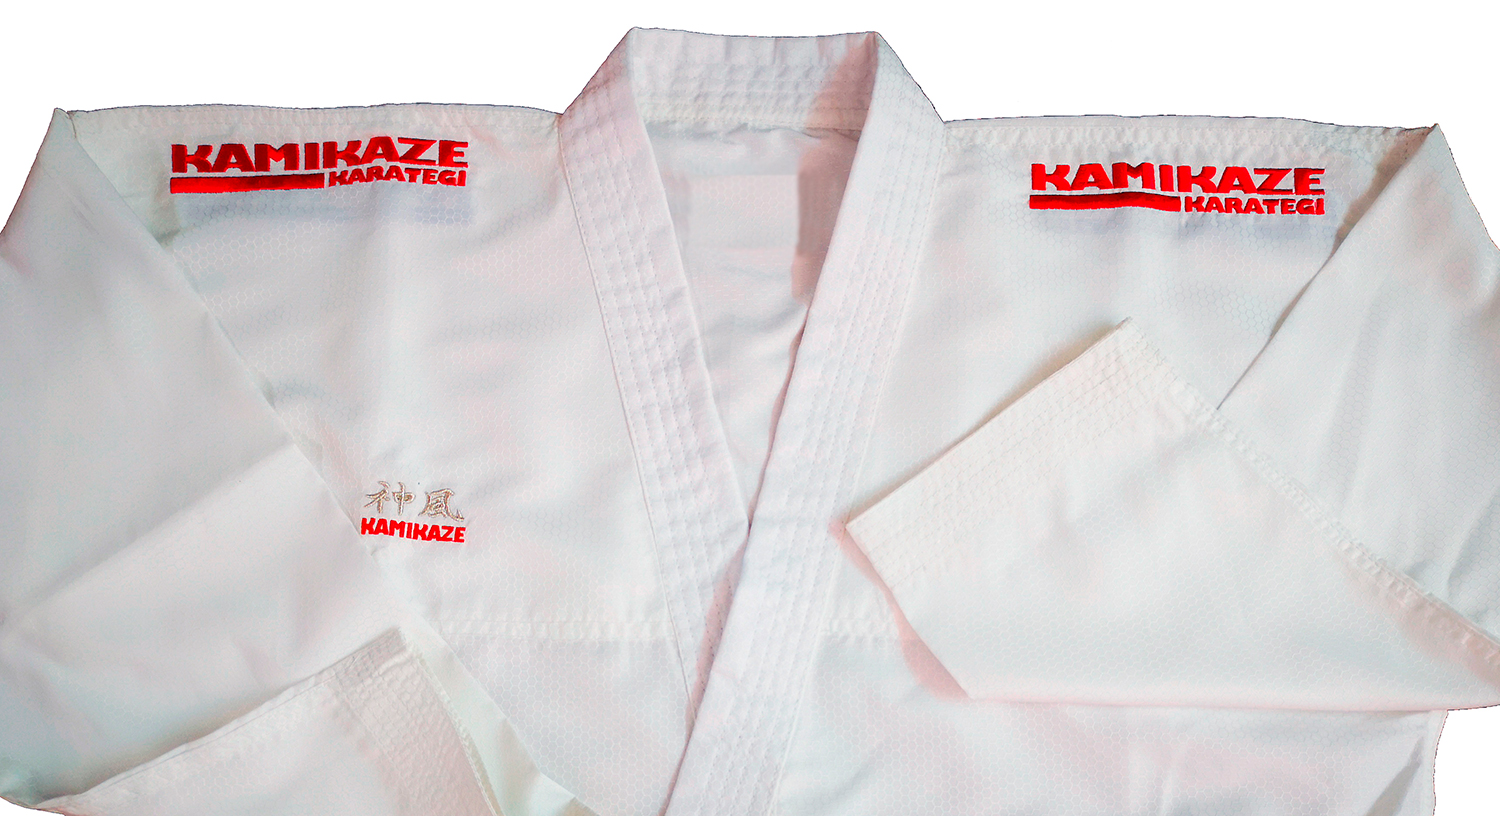 Kamikaze Karategi brand logo embroidery in Red on both shoulders